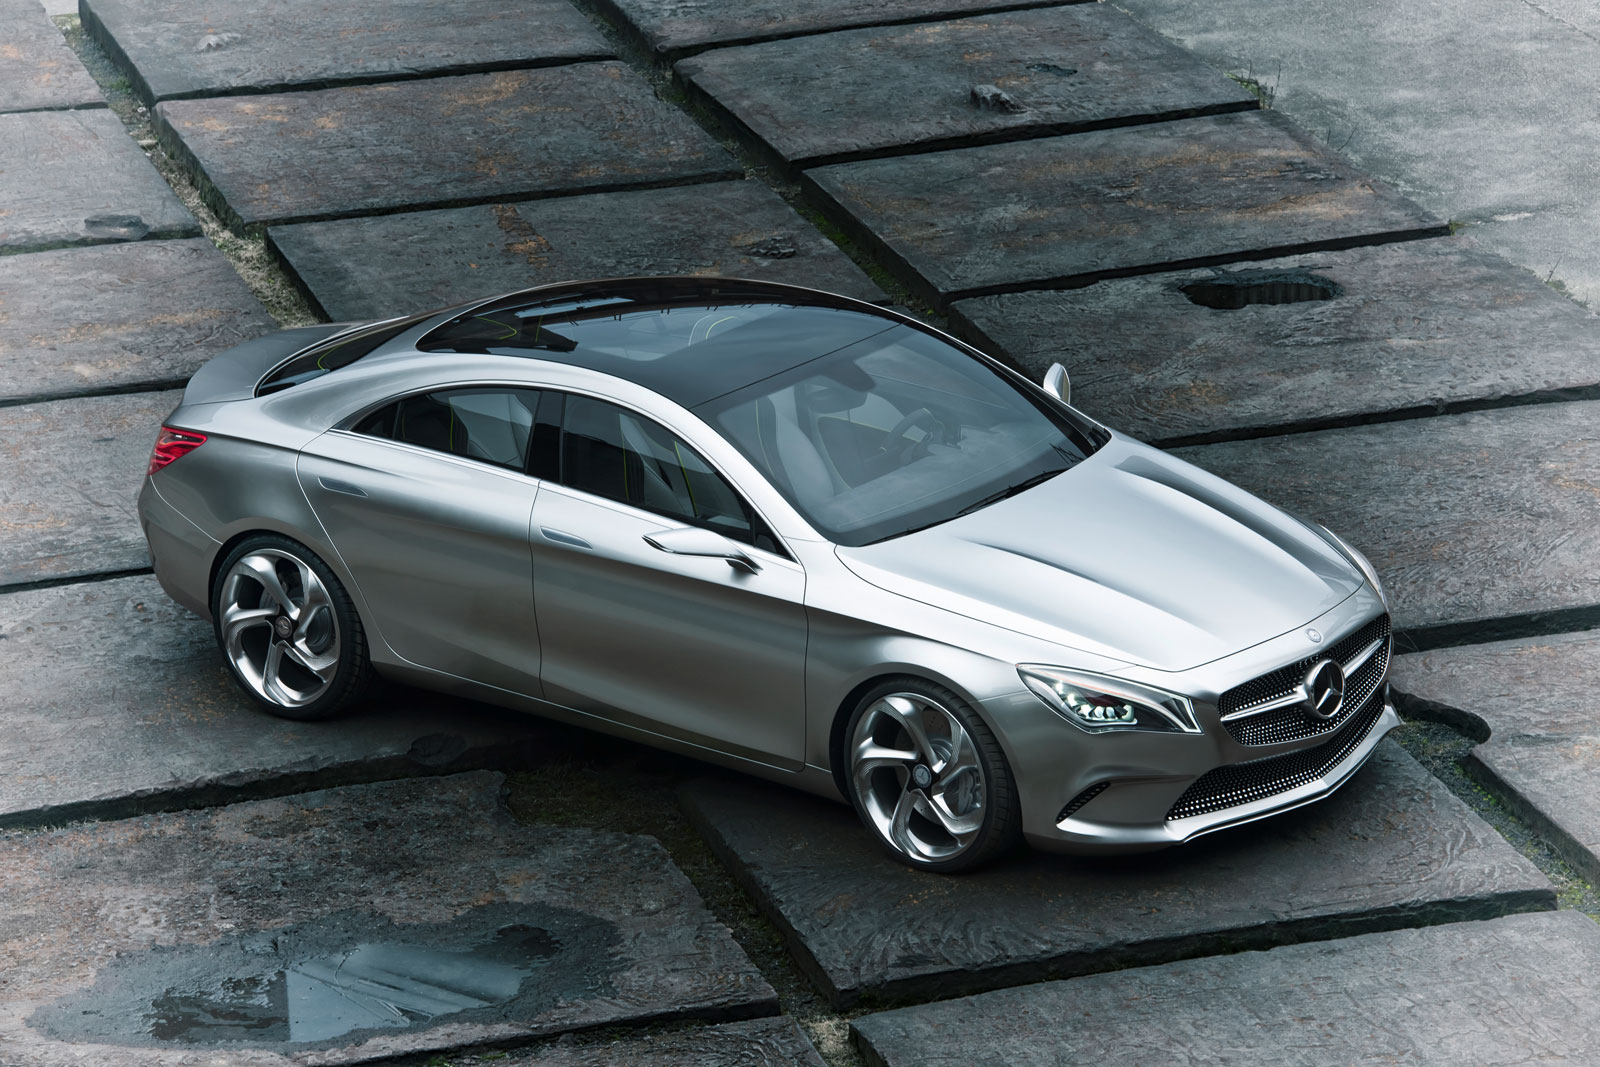 Mercedes-Benz Concept Style Coupe, 2012